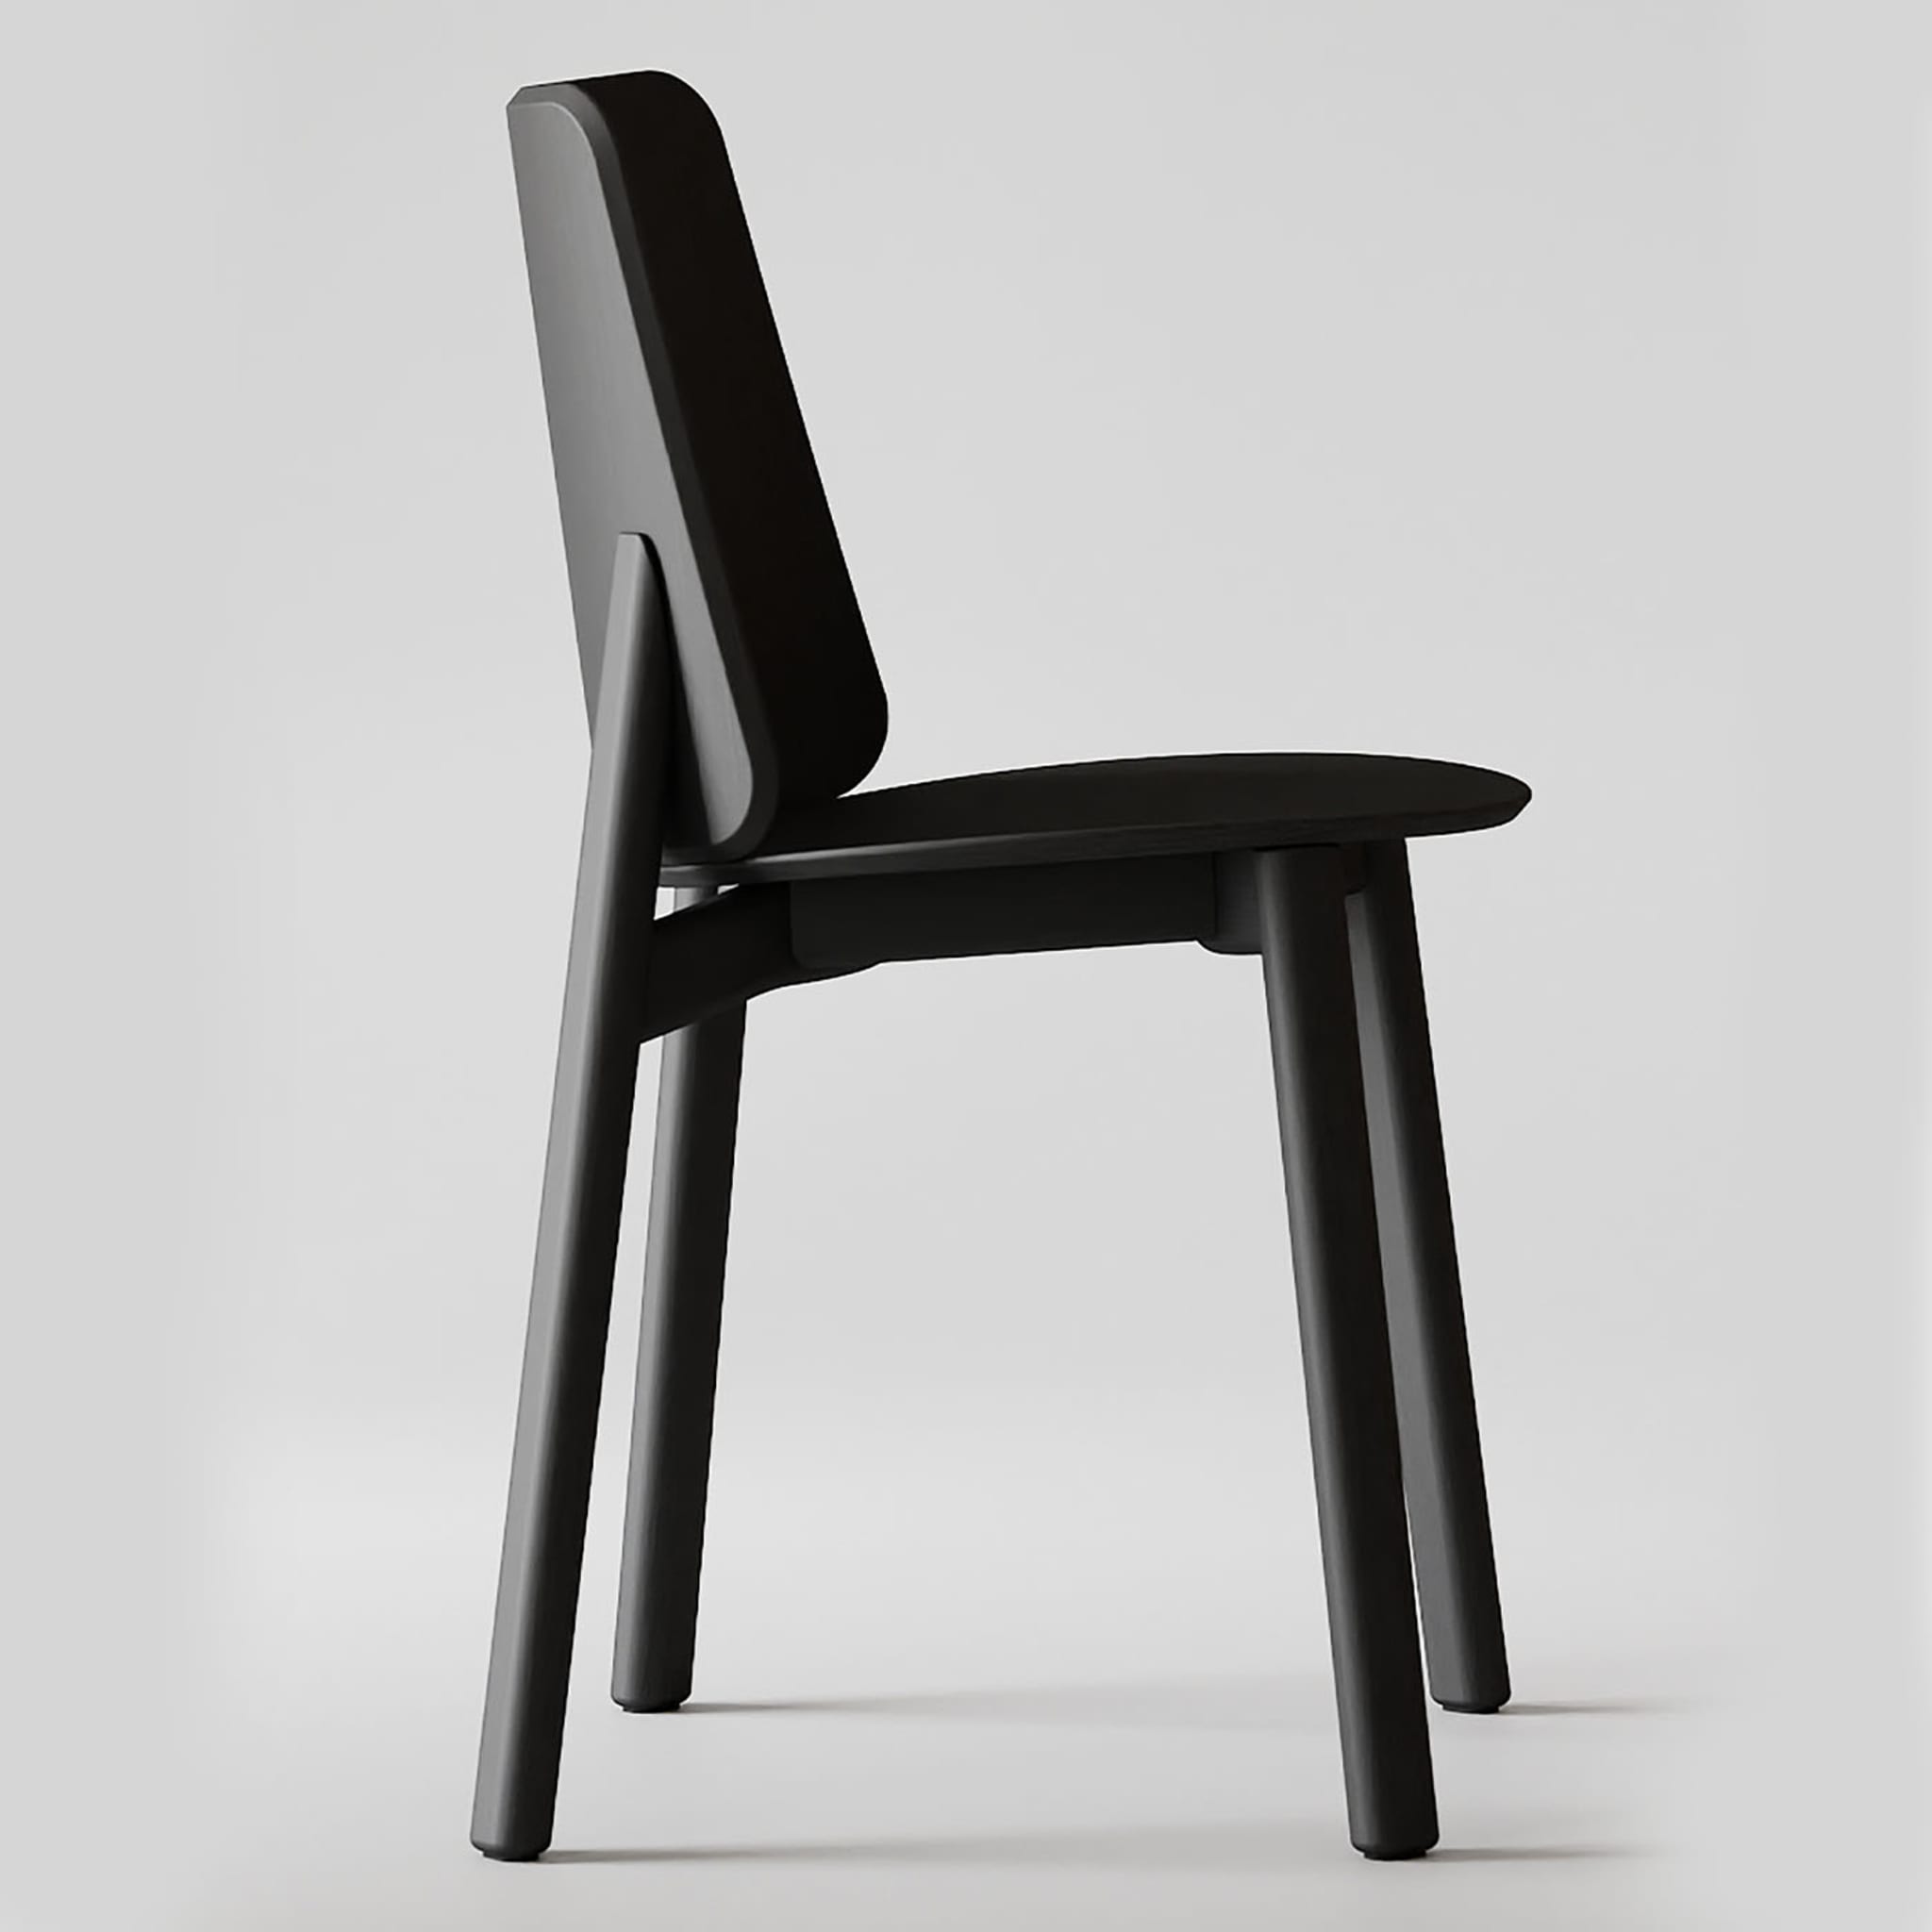 Billa Black Chair by Claudio Avetta - Alternative view 1